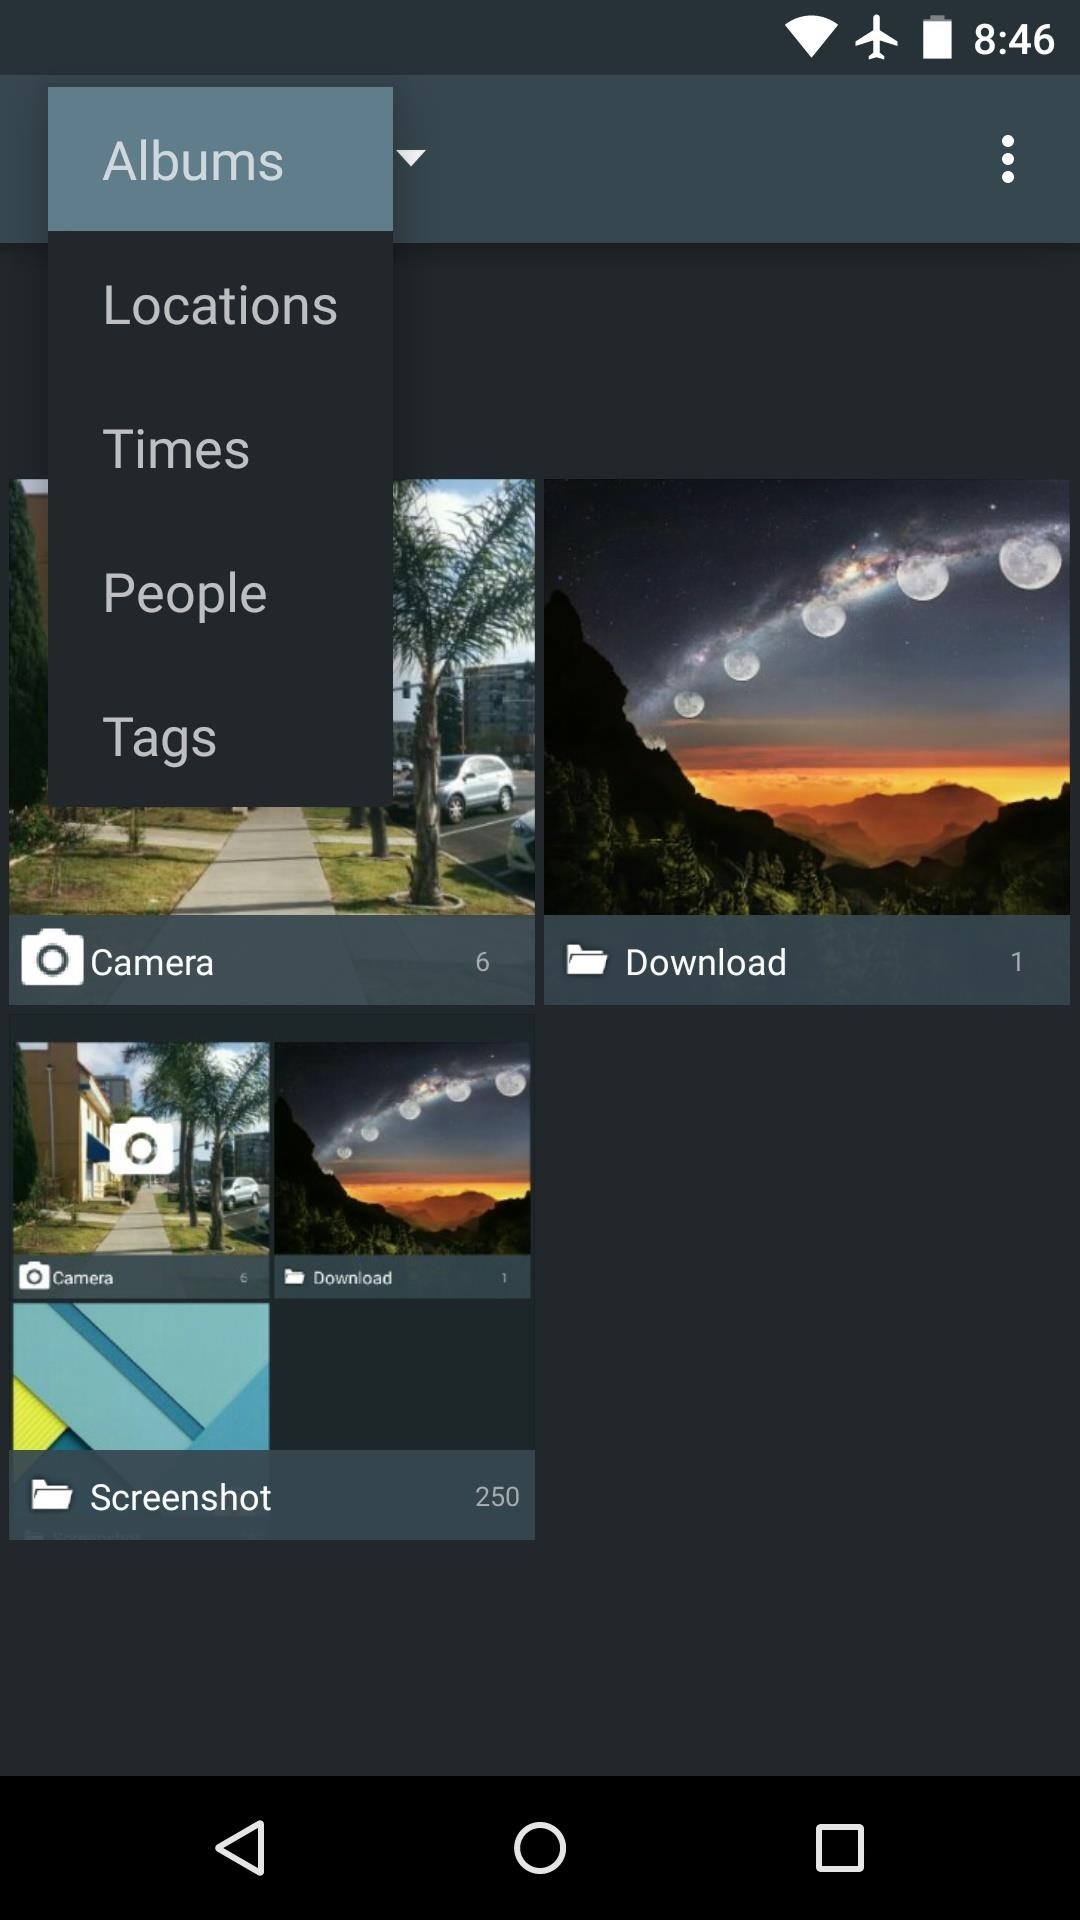 How to Install CyanogenMod's Gallery App on Any Lollipop Device